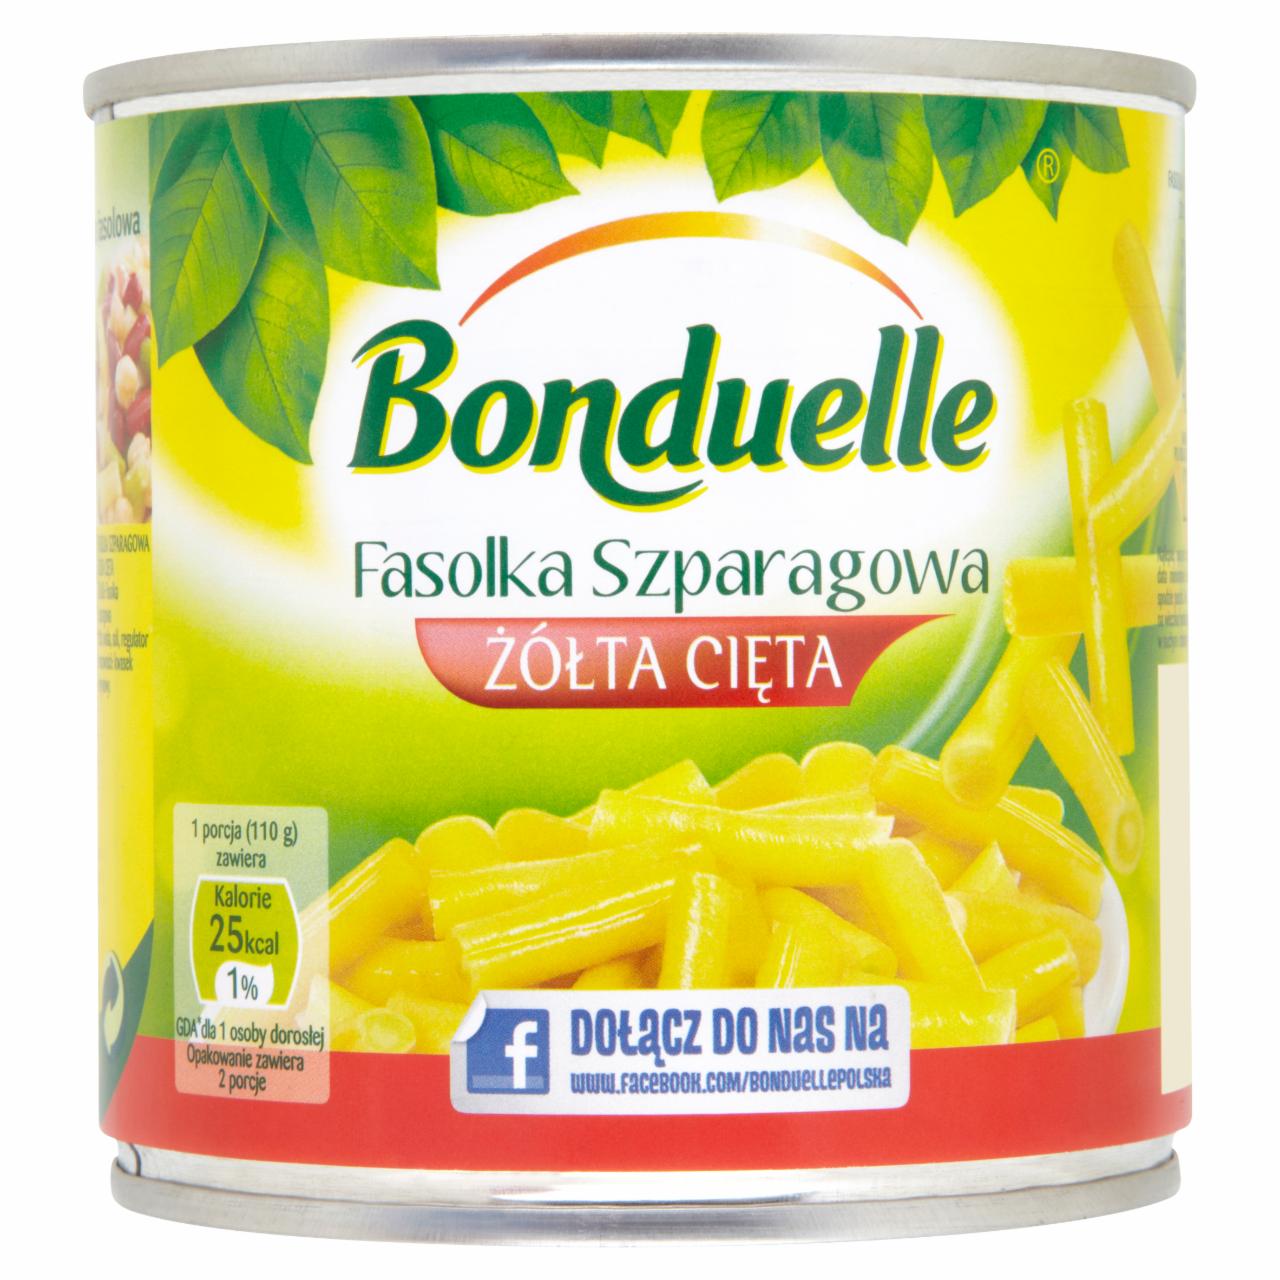 Zdjęcia - Bonduelle Fasolka szparagowa żółta cięta 400 g